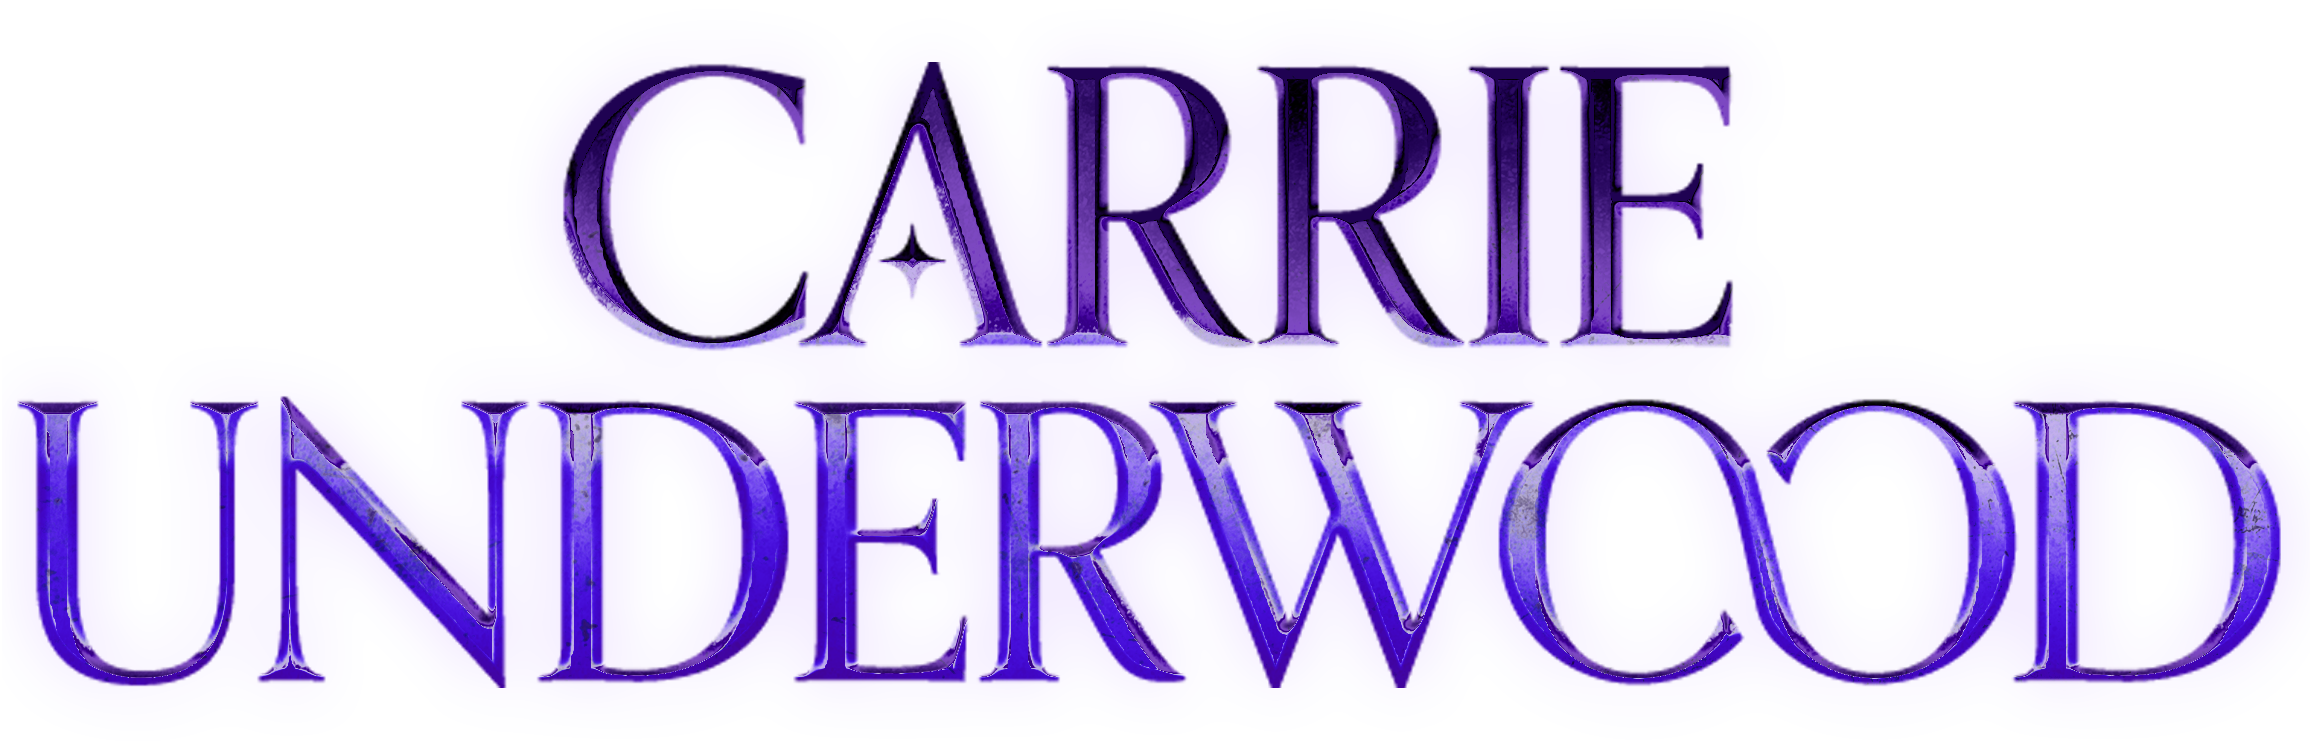 Carrie Underwood logo